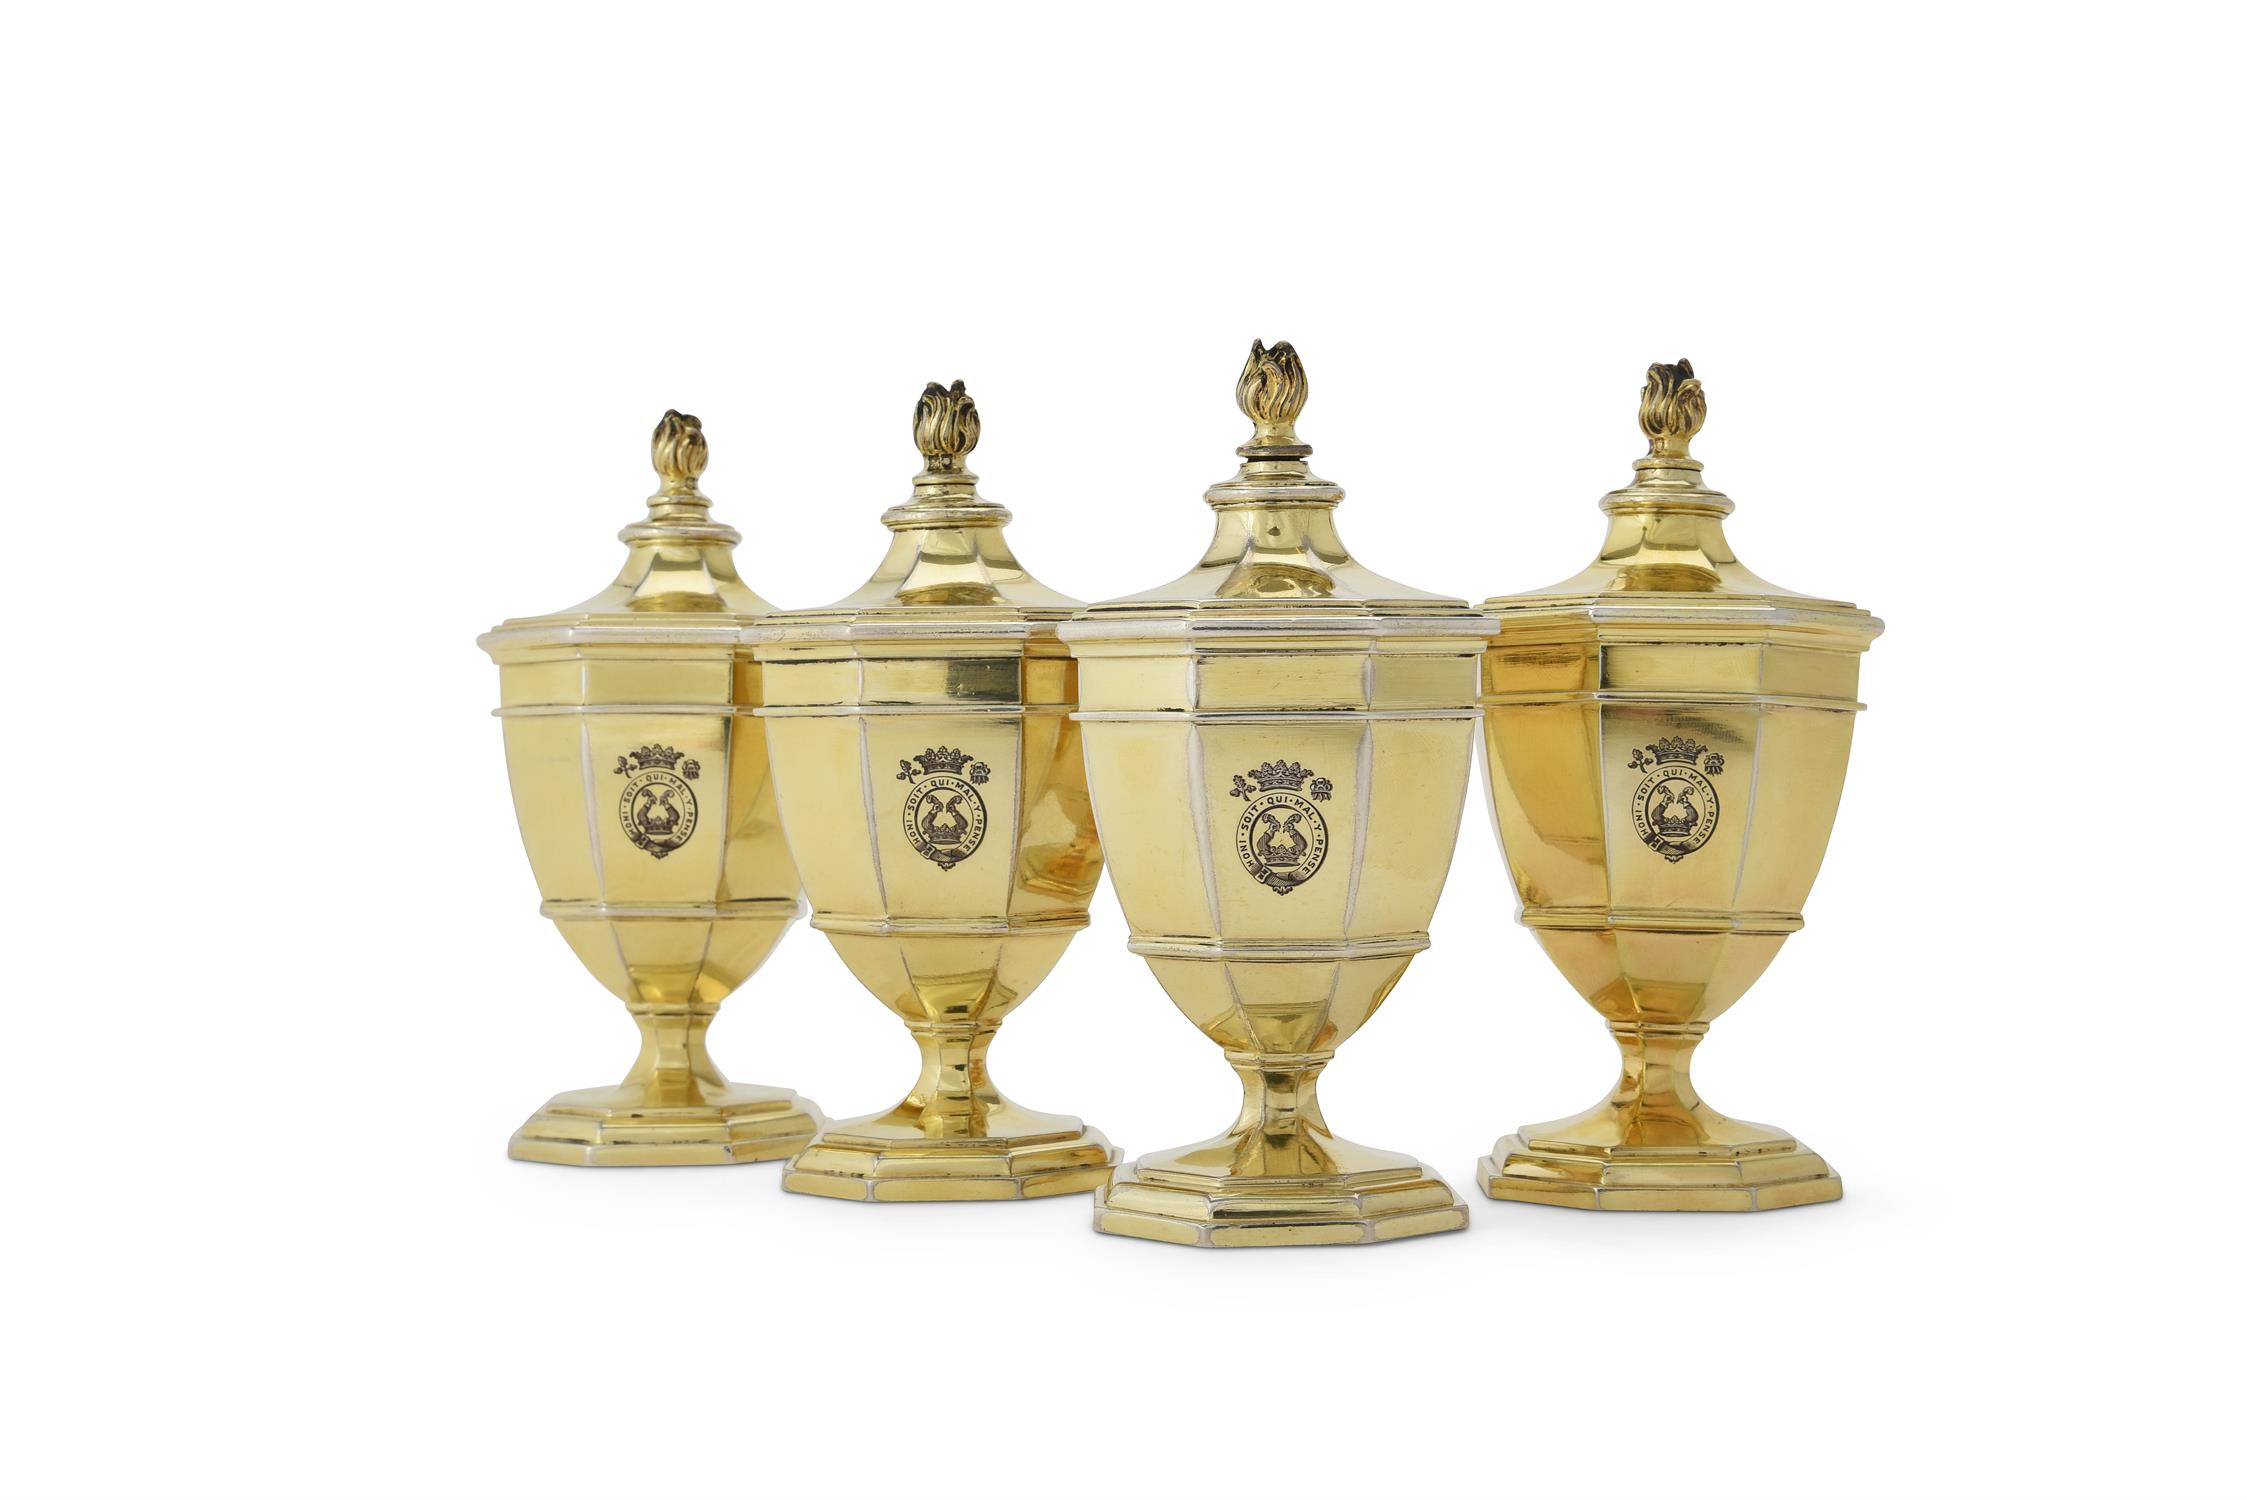 A set of four silver gilt octagonal vase shape salt cellars by Carrington & Co. - Image 2 of 3